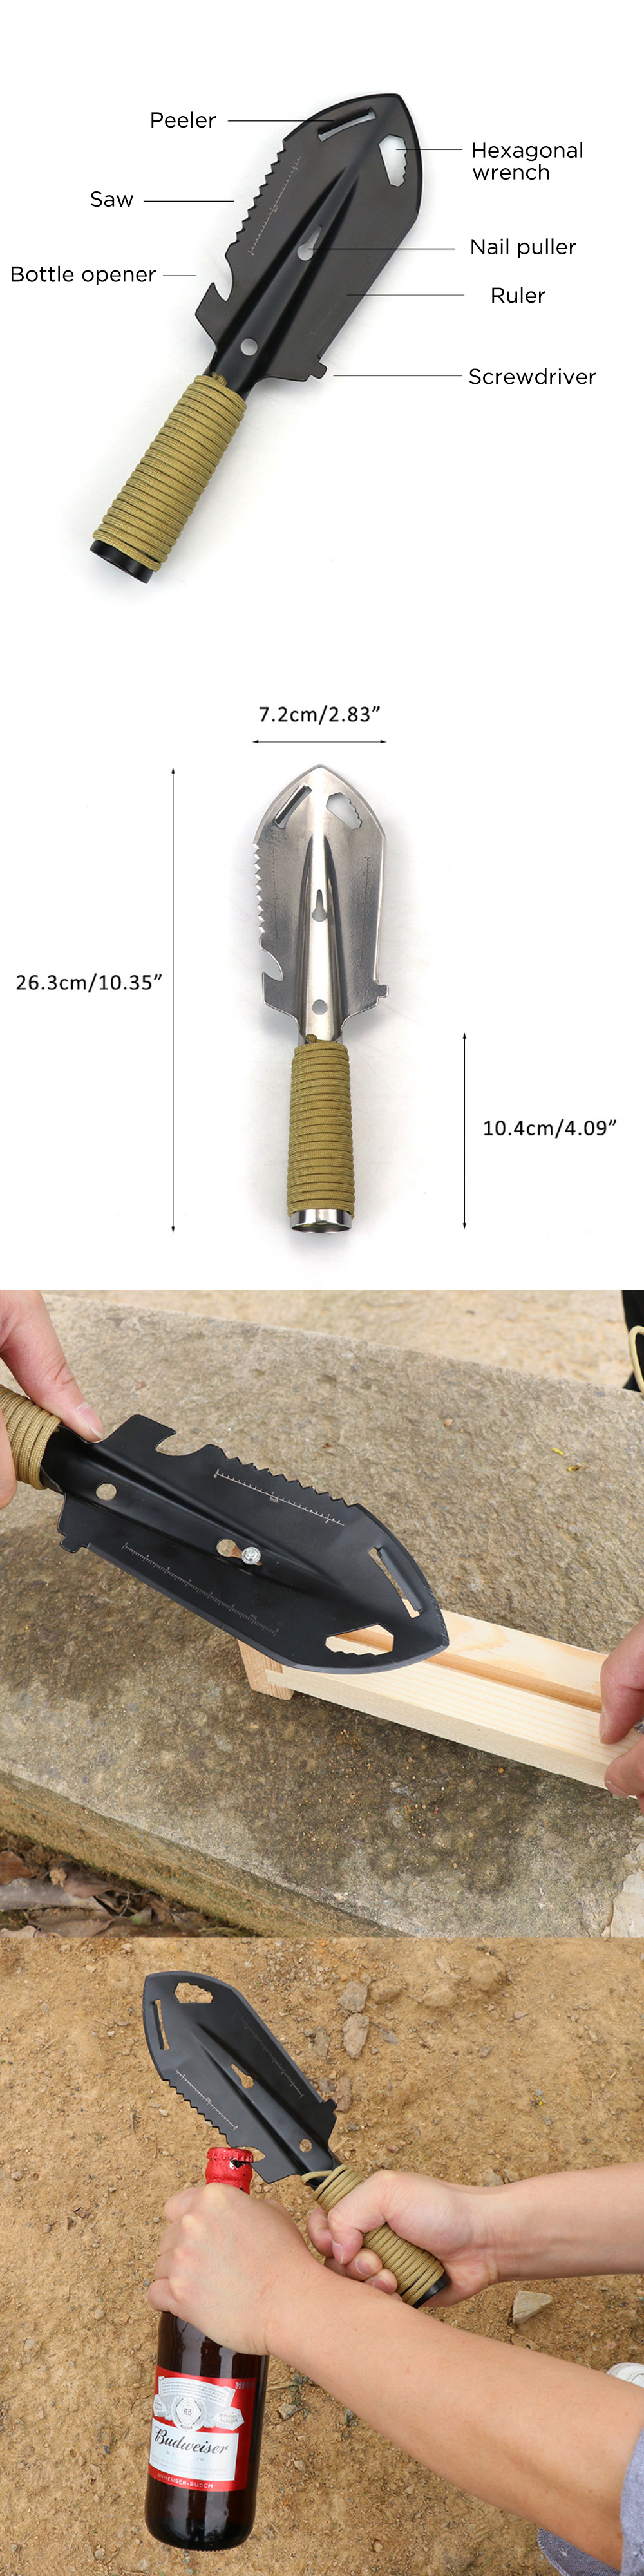 XANESreg-7-in-1-Tactical-Shovel-EDC-Multifunction-Survival-Spade-Peeler-Saw-Bottle-Opener-Screwdrive-1806175-1